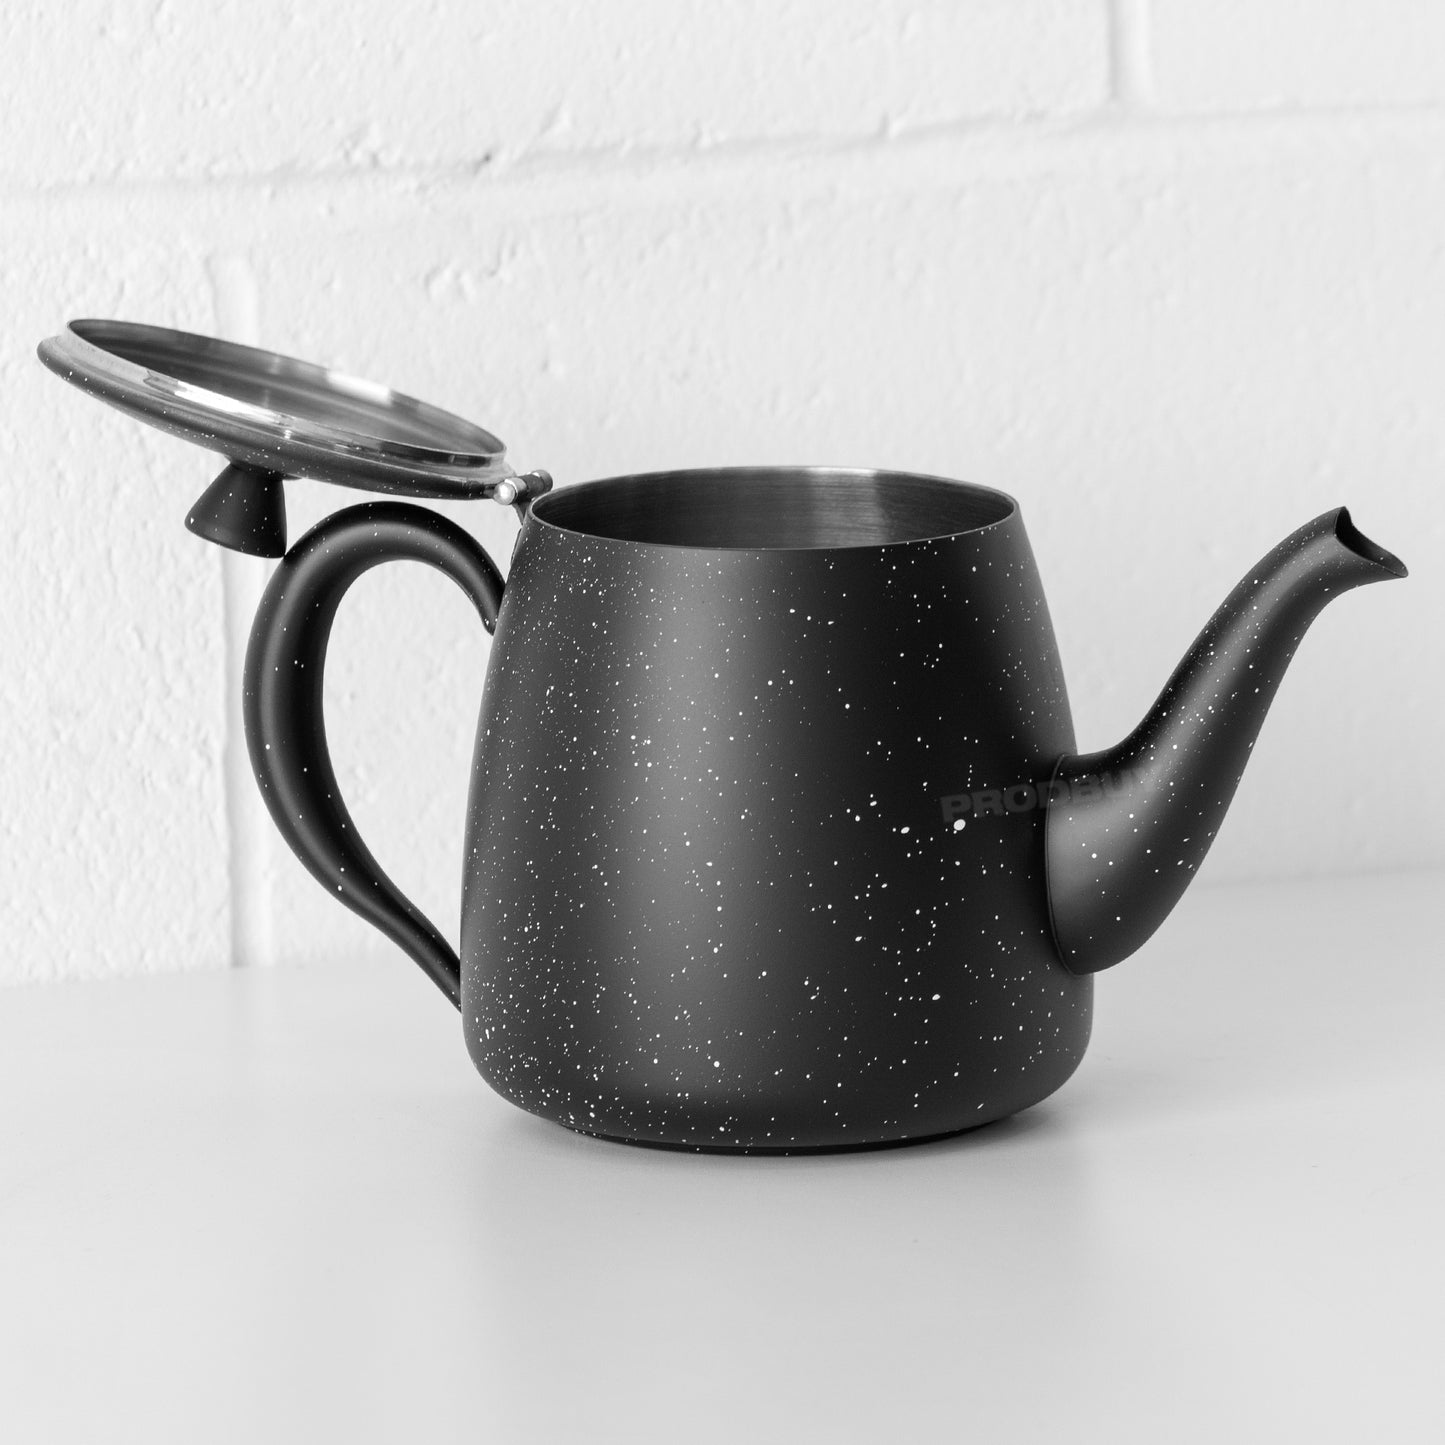 Black Stainless Steel 48oz Teapot